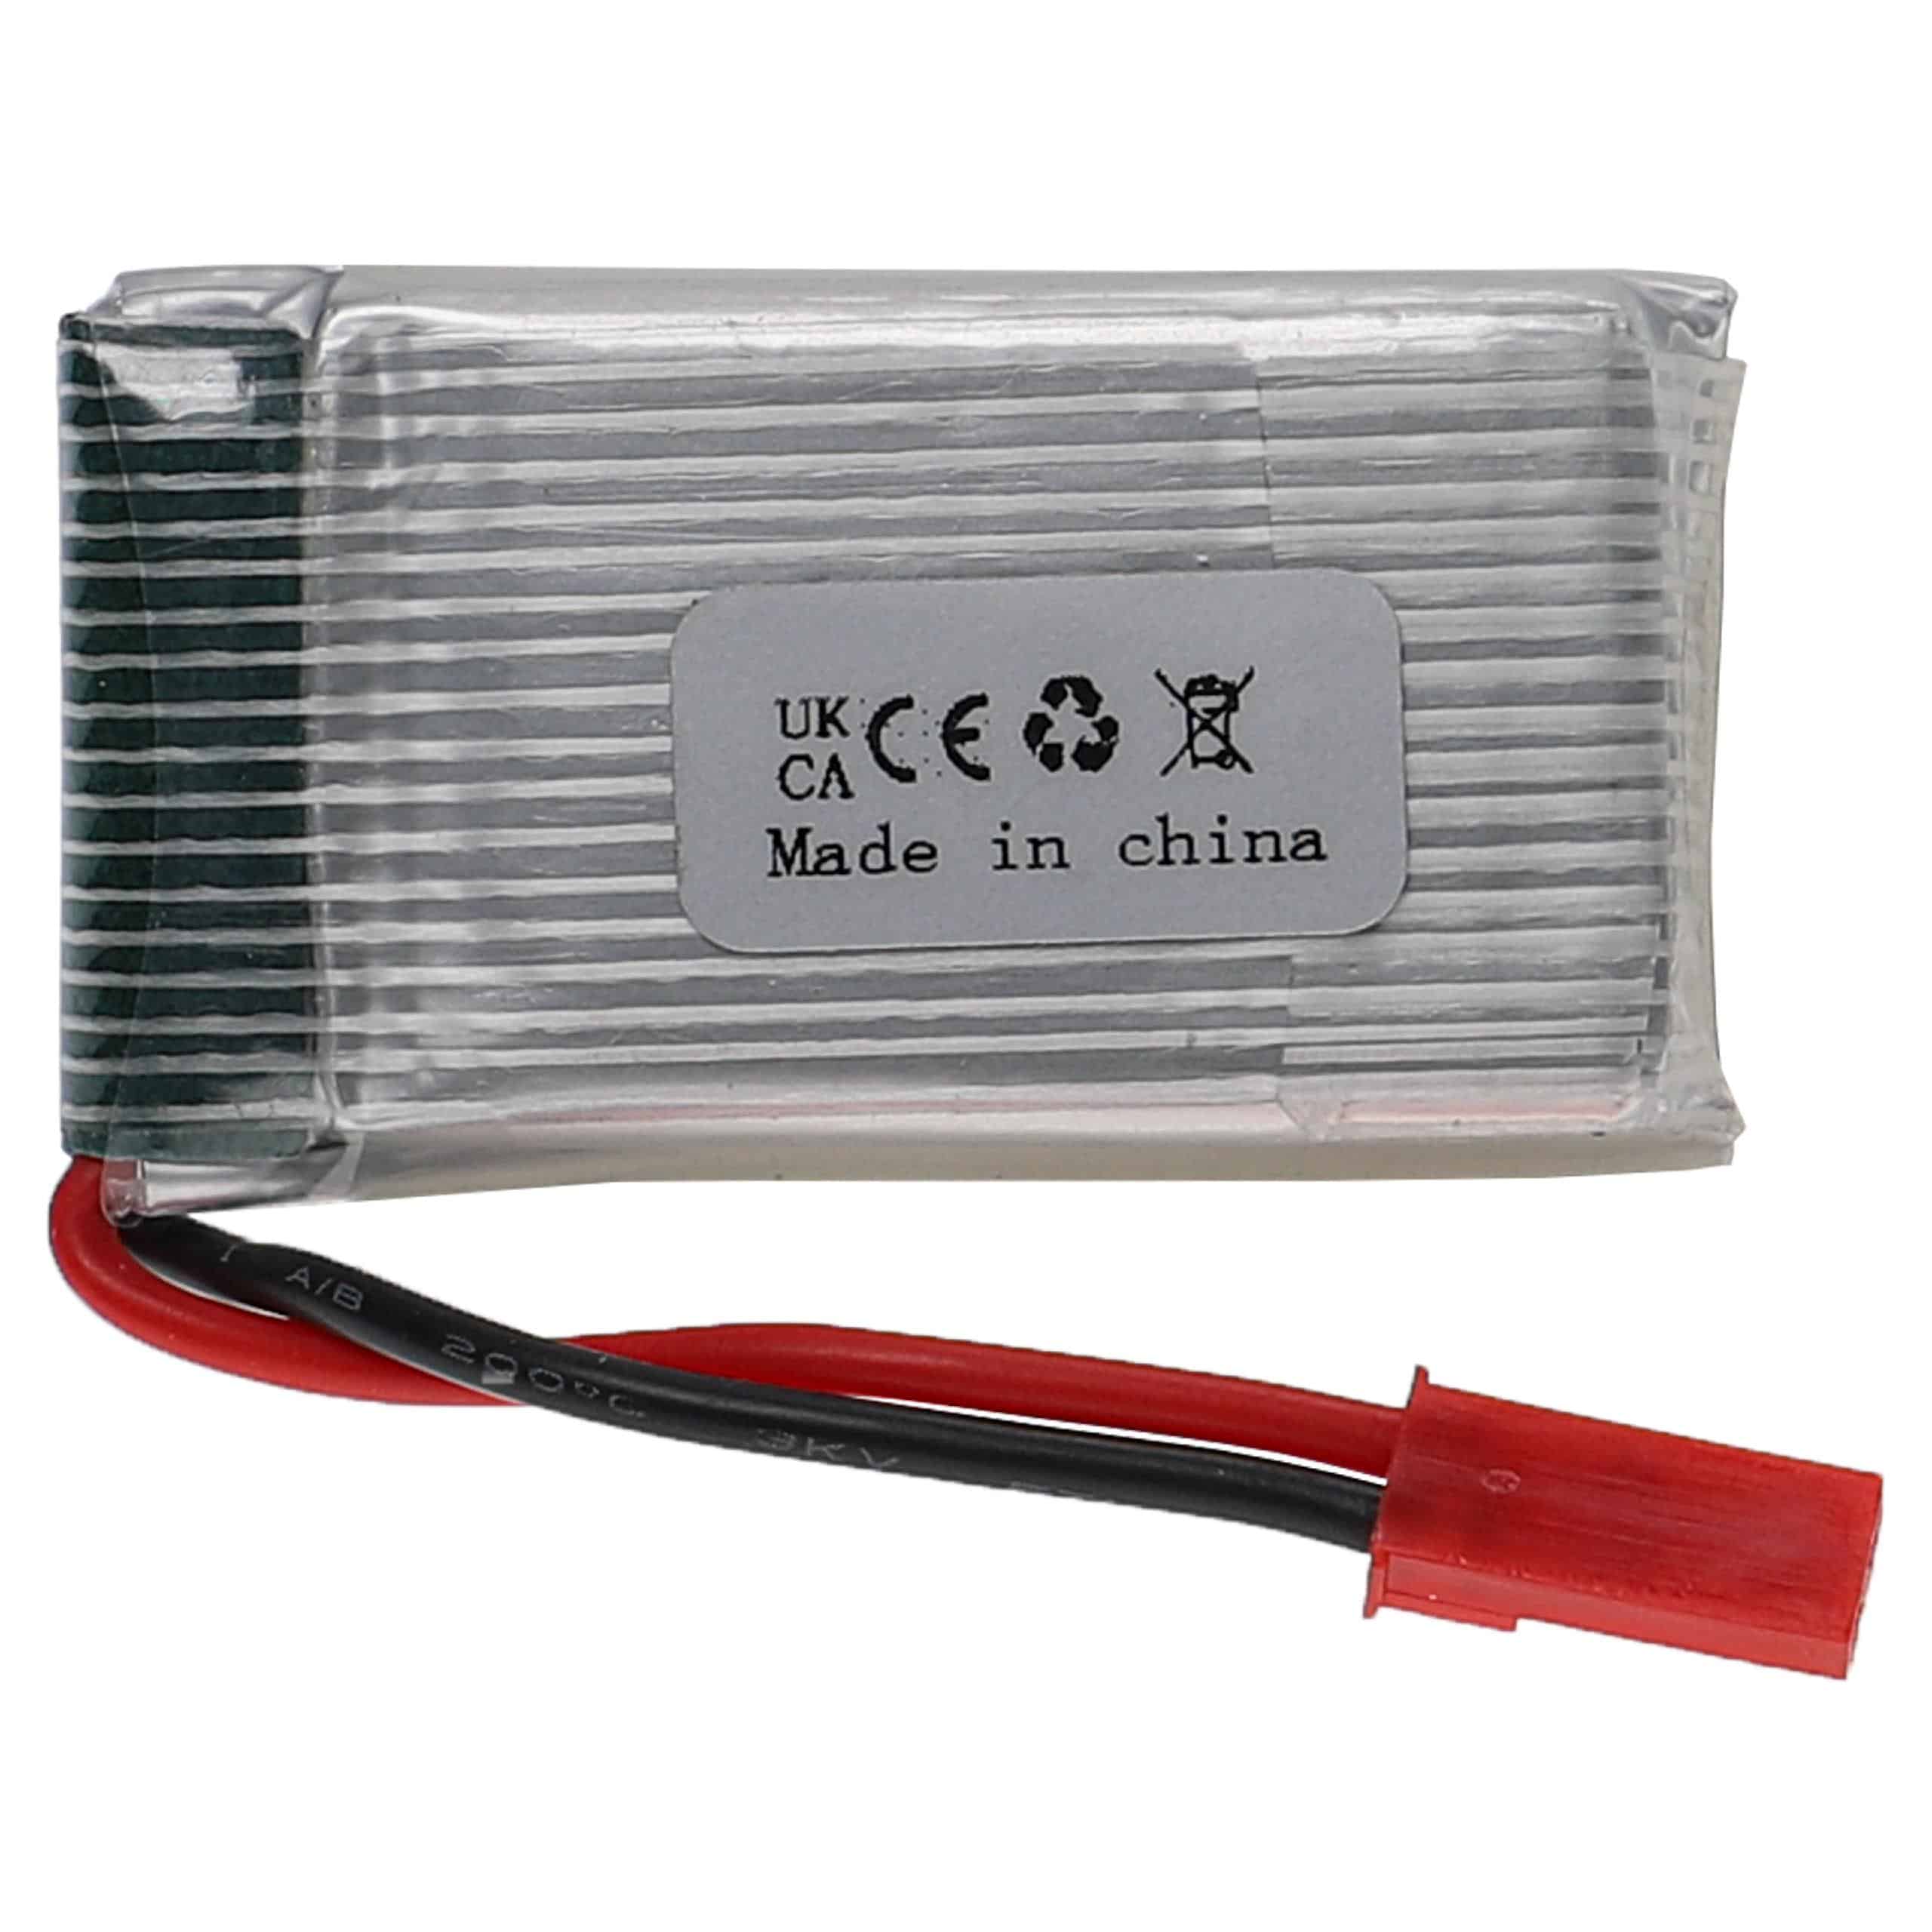 Akumulator do modeli zdalnie sterowanych RC - 650 mAh 3,7 V LiPo, BEC